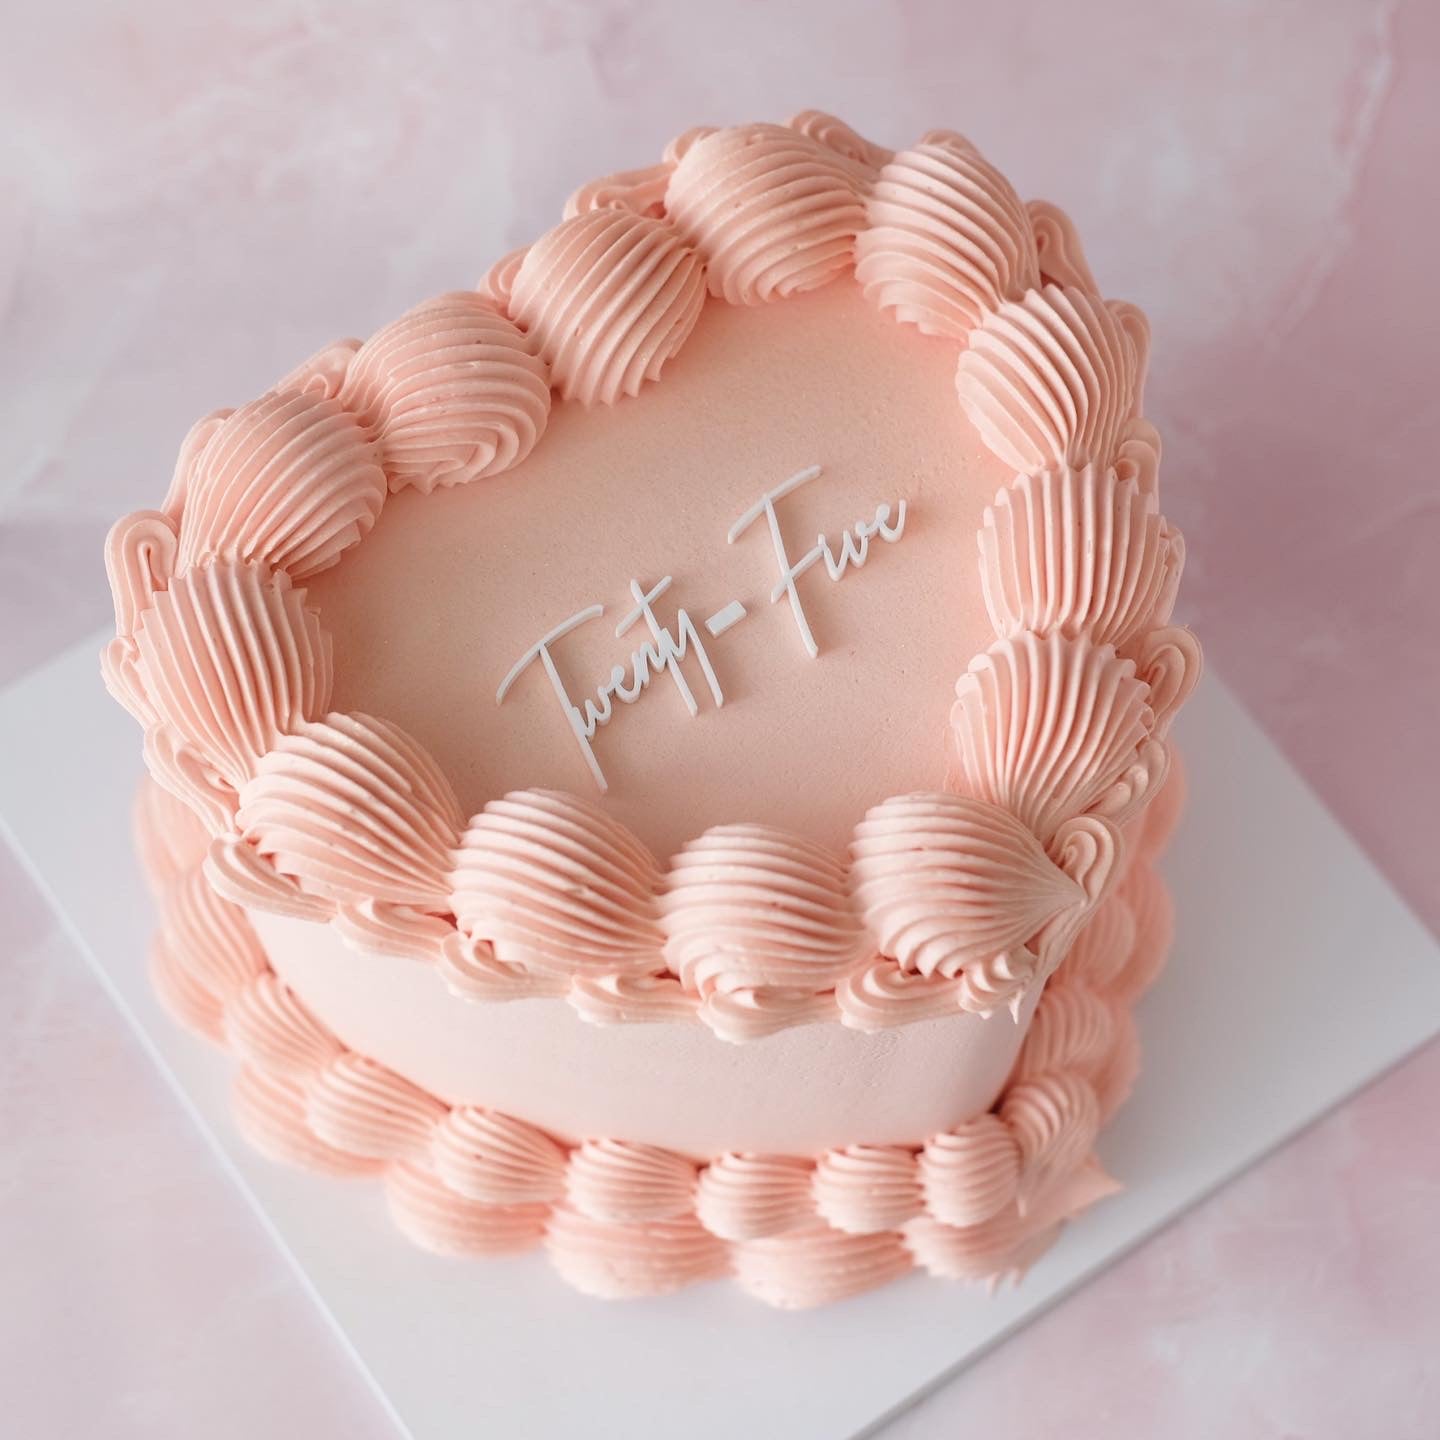 AnnnnnnnnnnnnA on Twitter | Pretty birthday cakes, Desserts, Just cakes